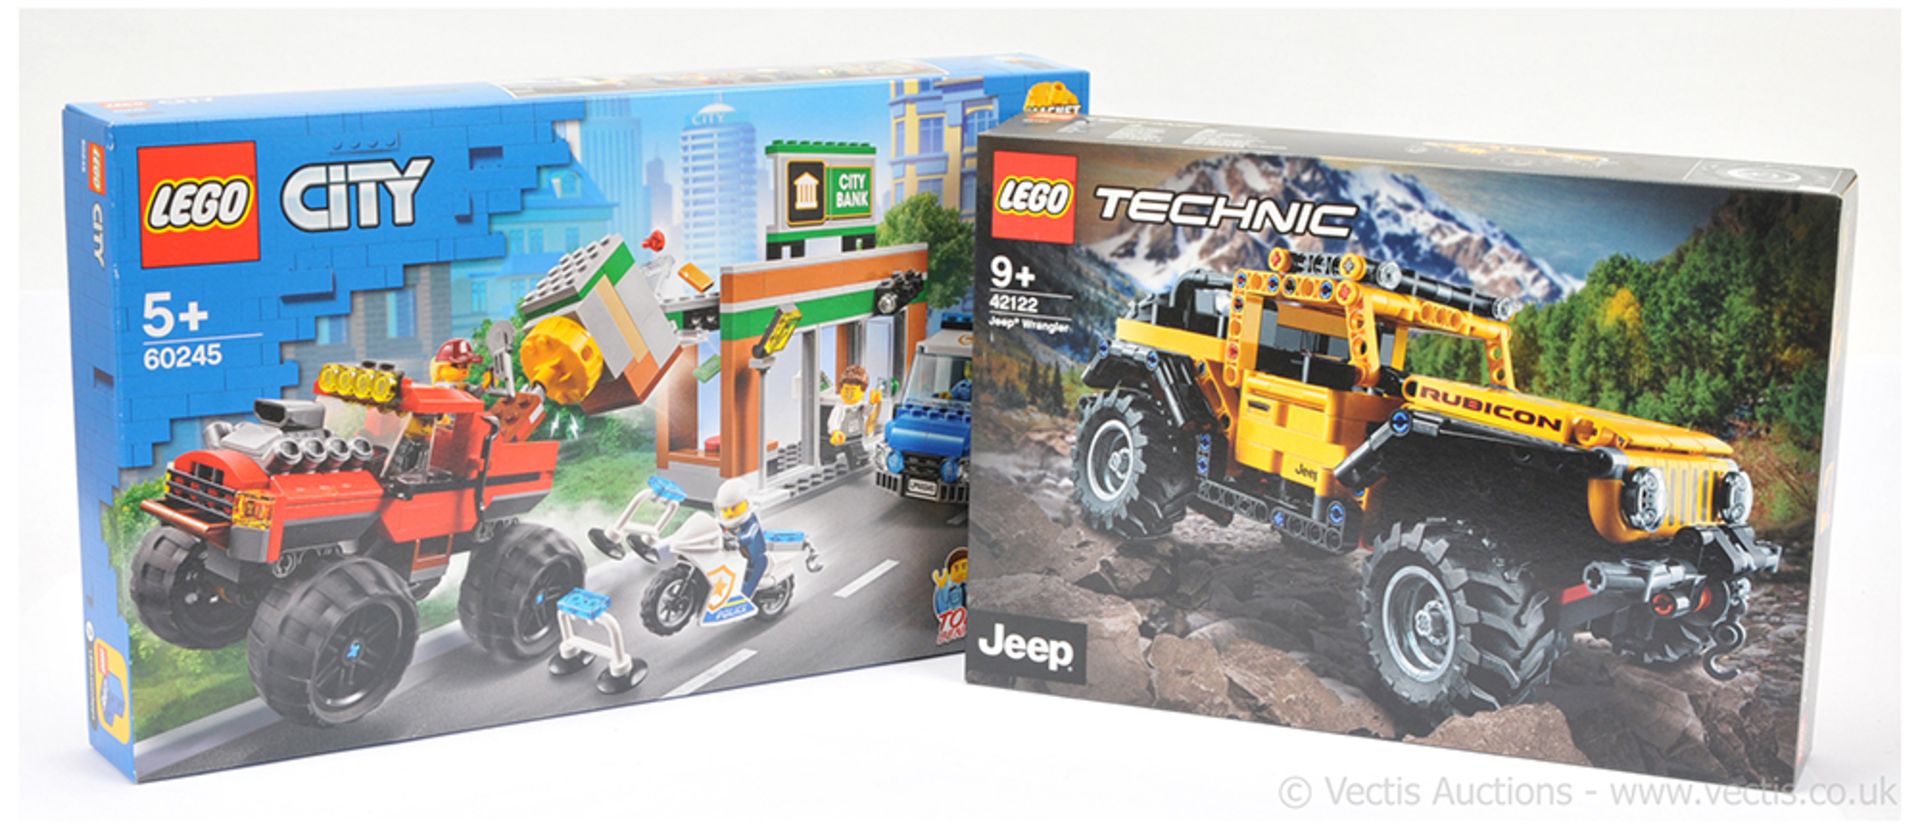 PAIR inc Lego Technic set number 42122 Jeep